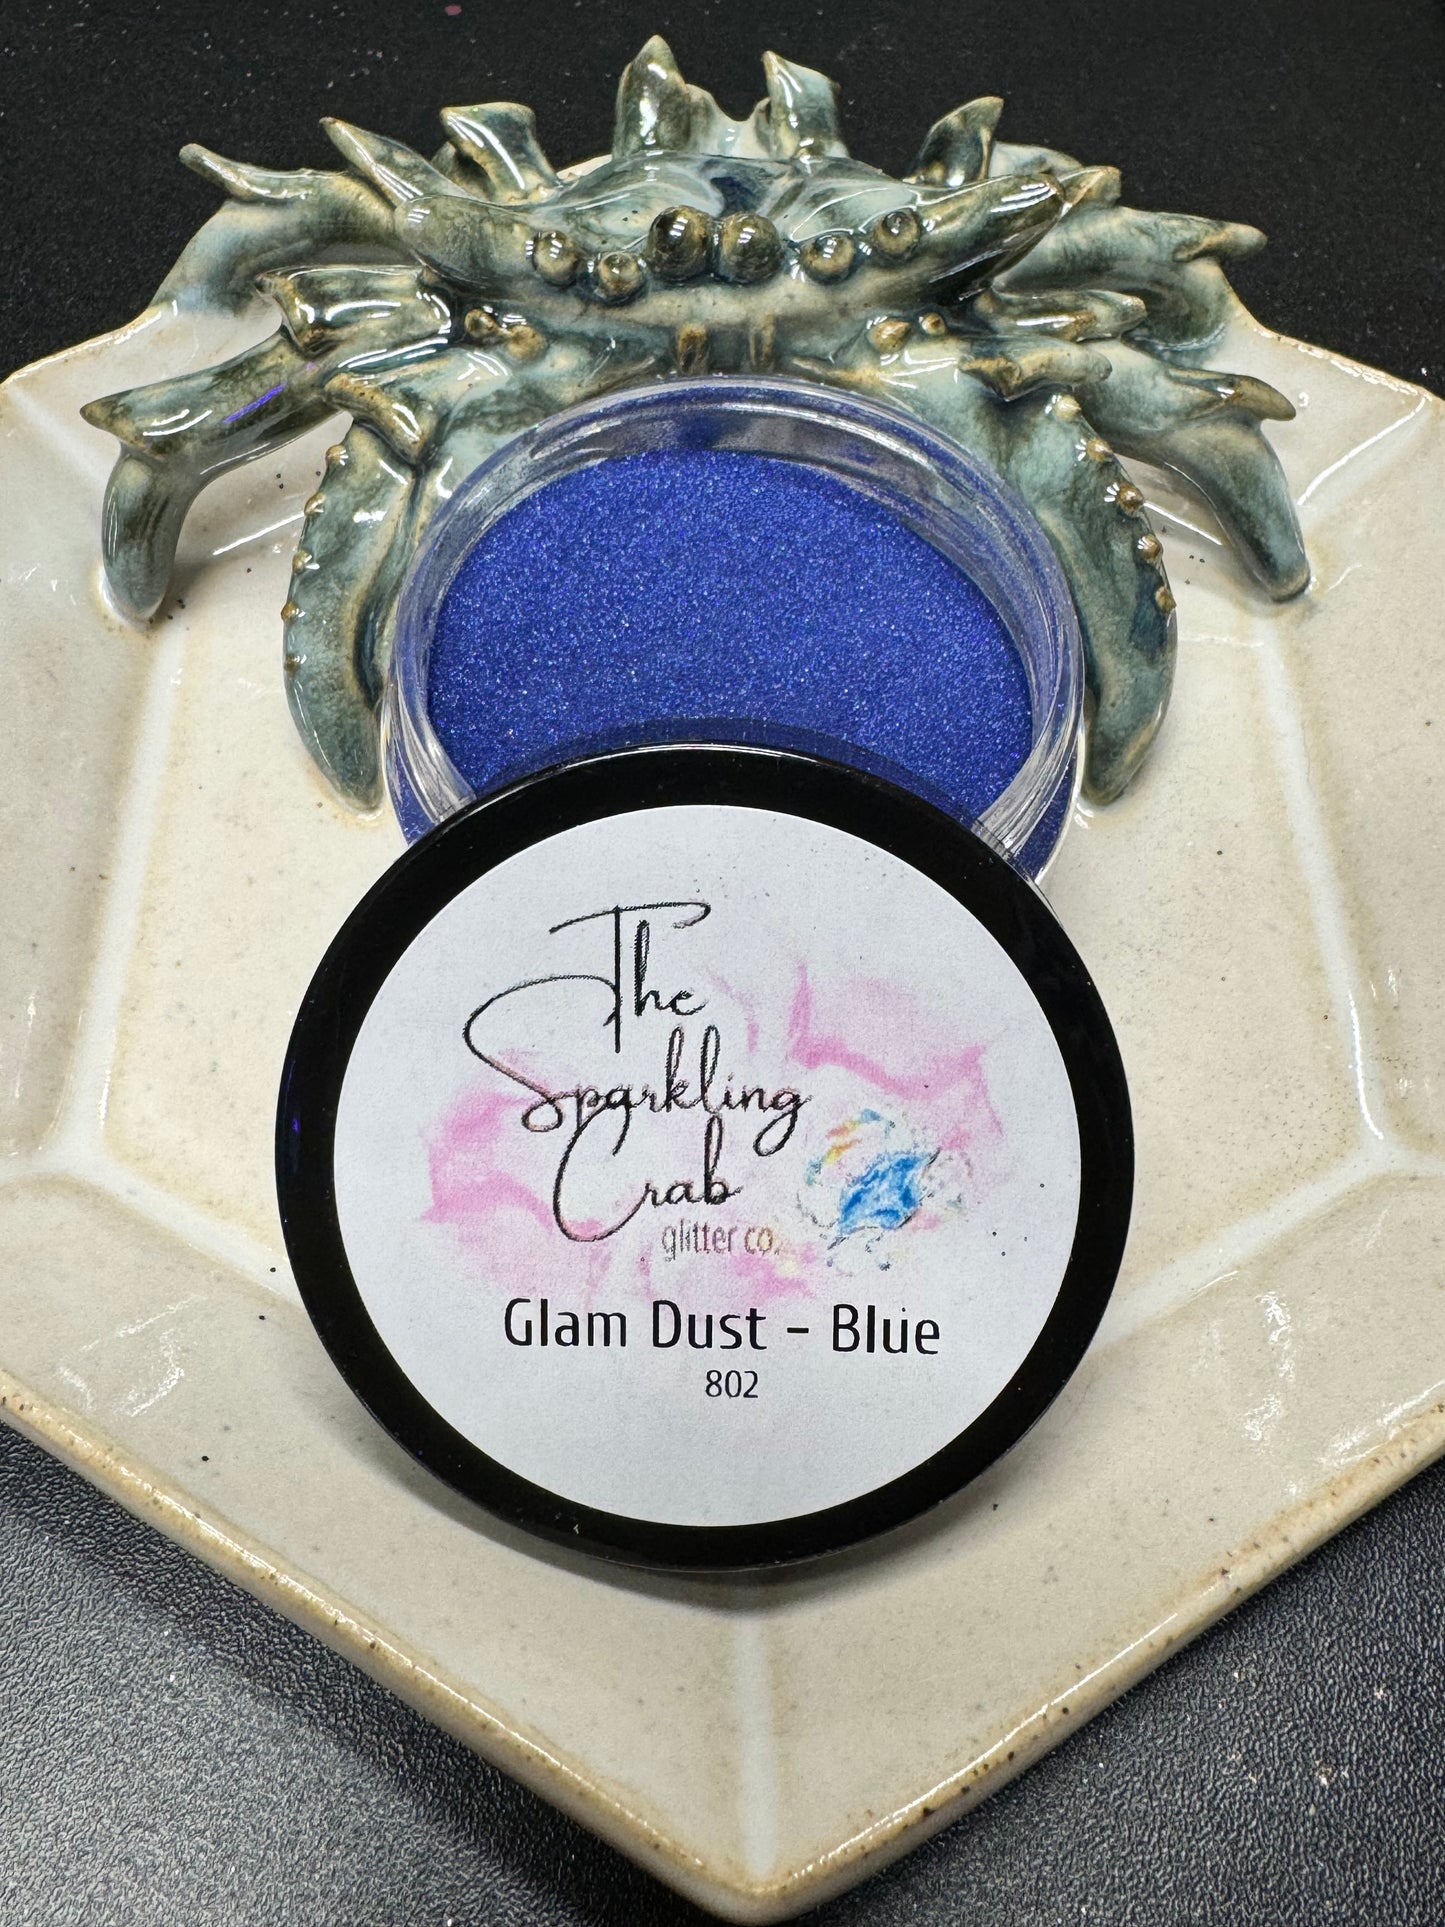 Glam Dust - Blue